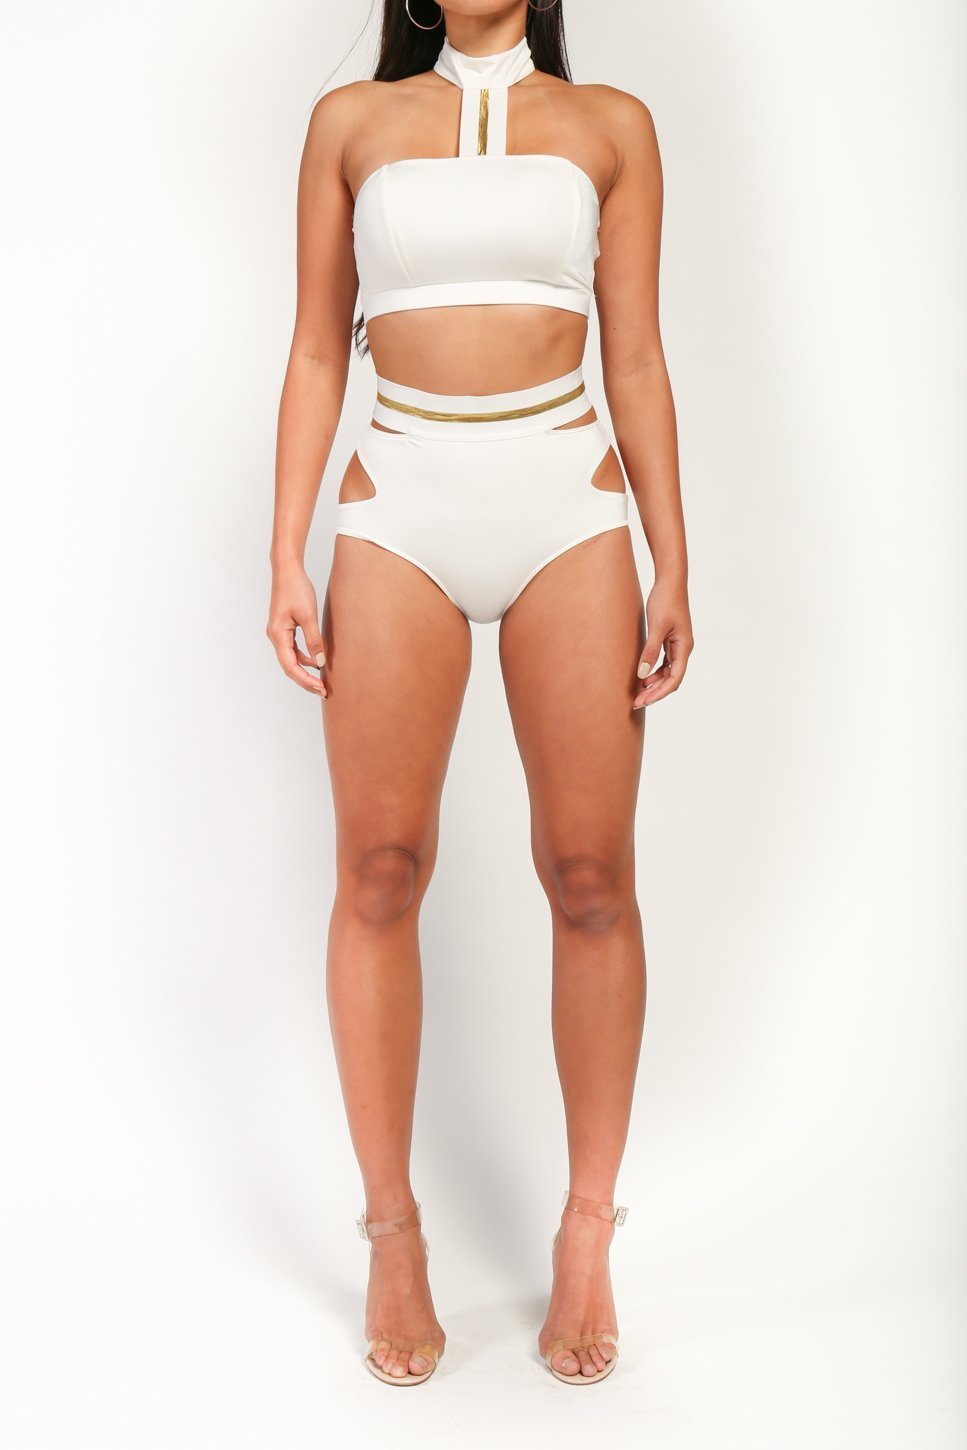 Strut White Bikini Set - SurgeStyle Boutique